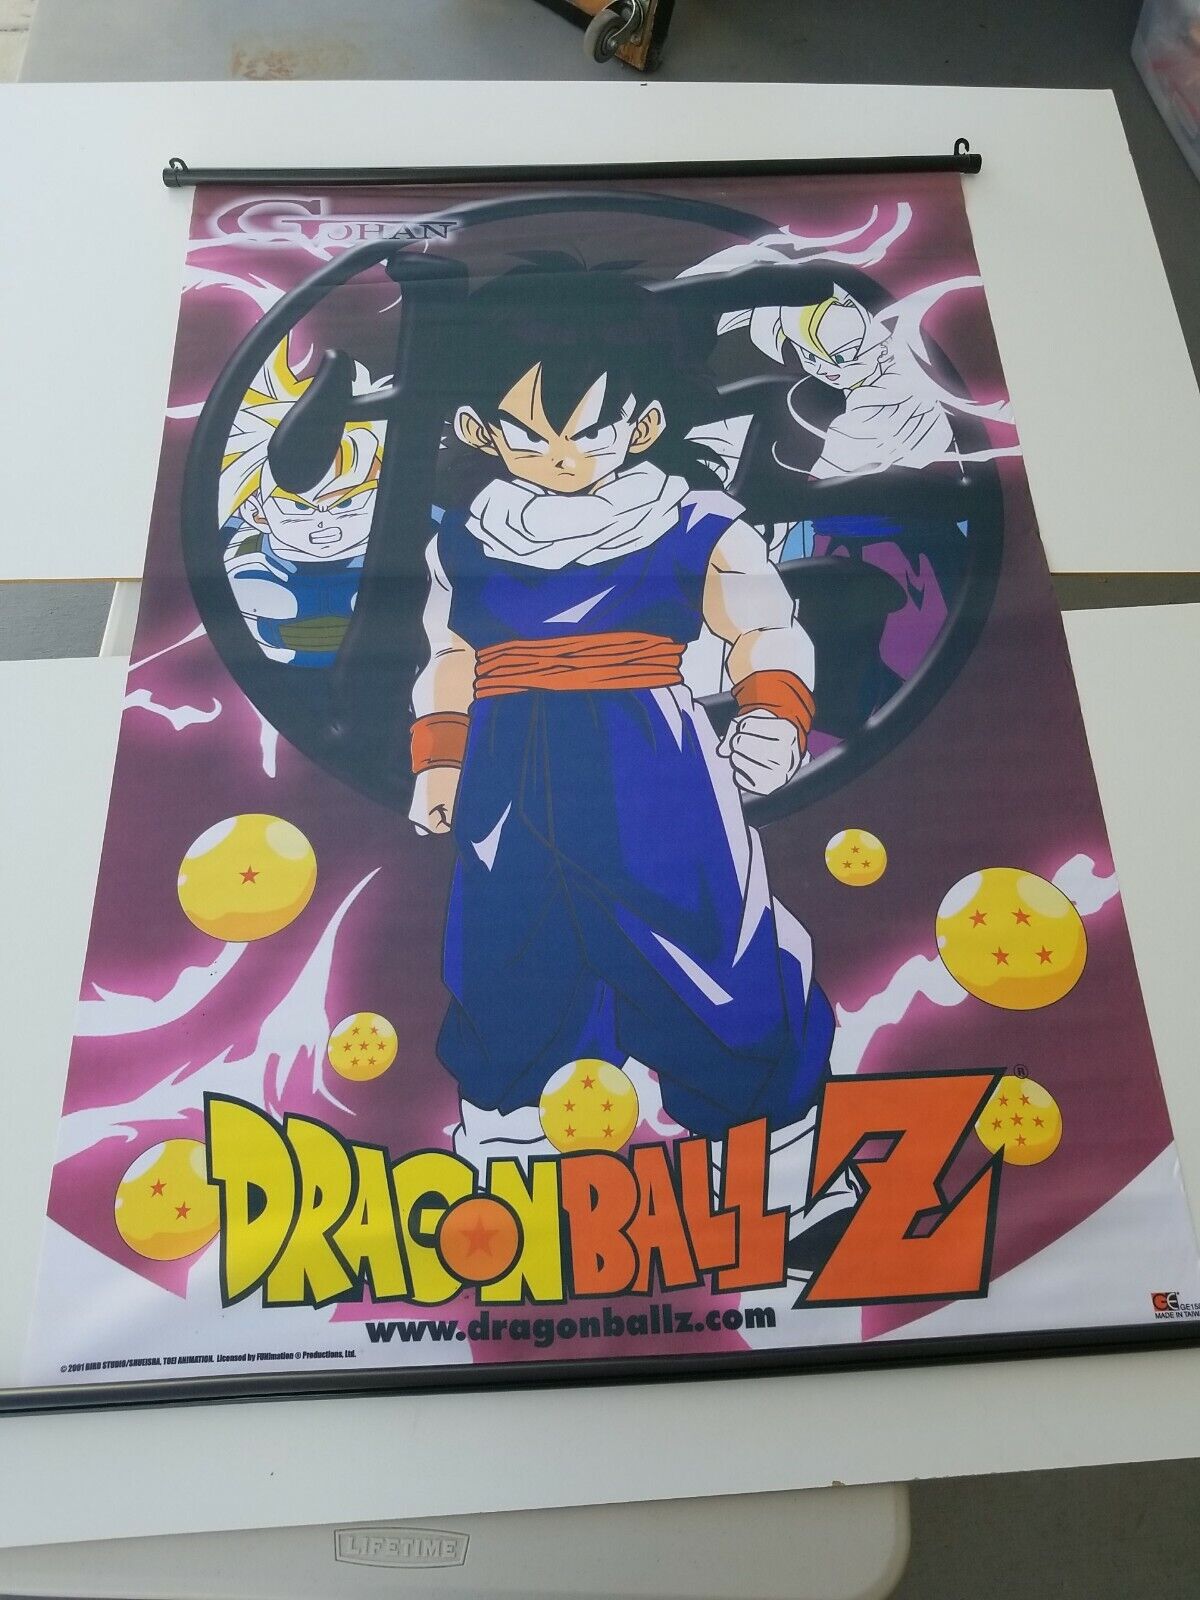 Vintage rare anime Dragonball Z vintage fabric banner poster 1999 41